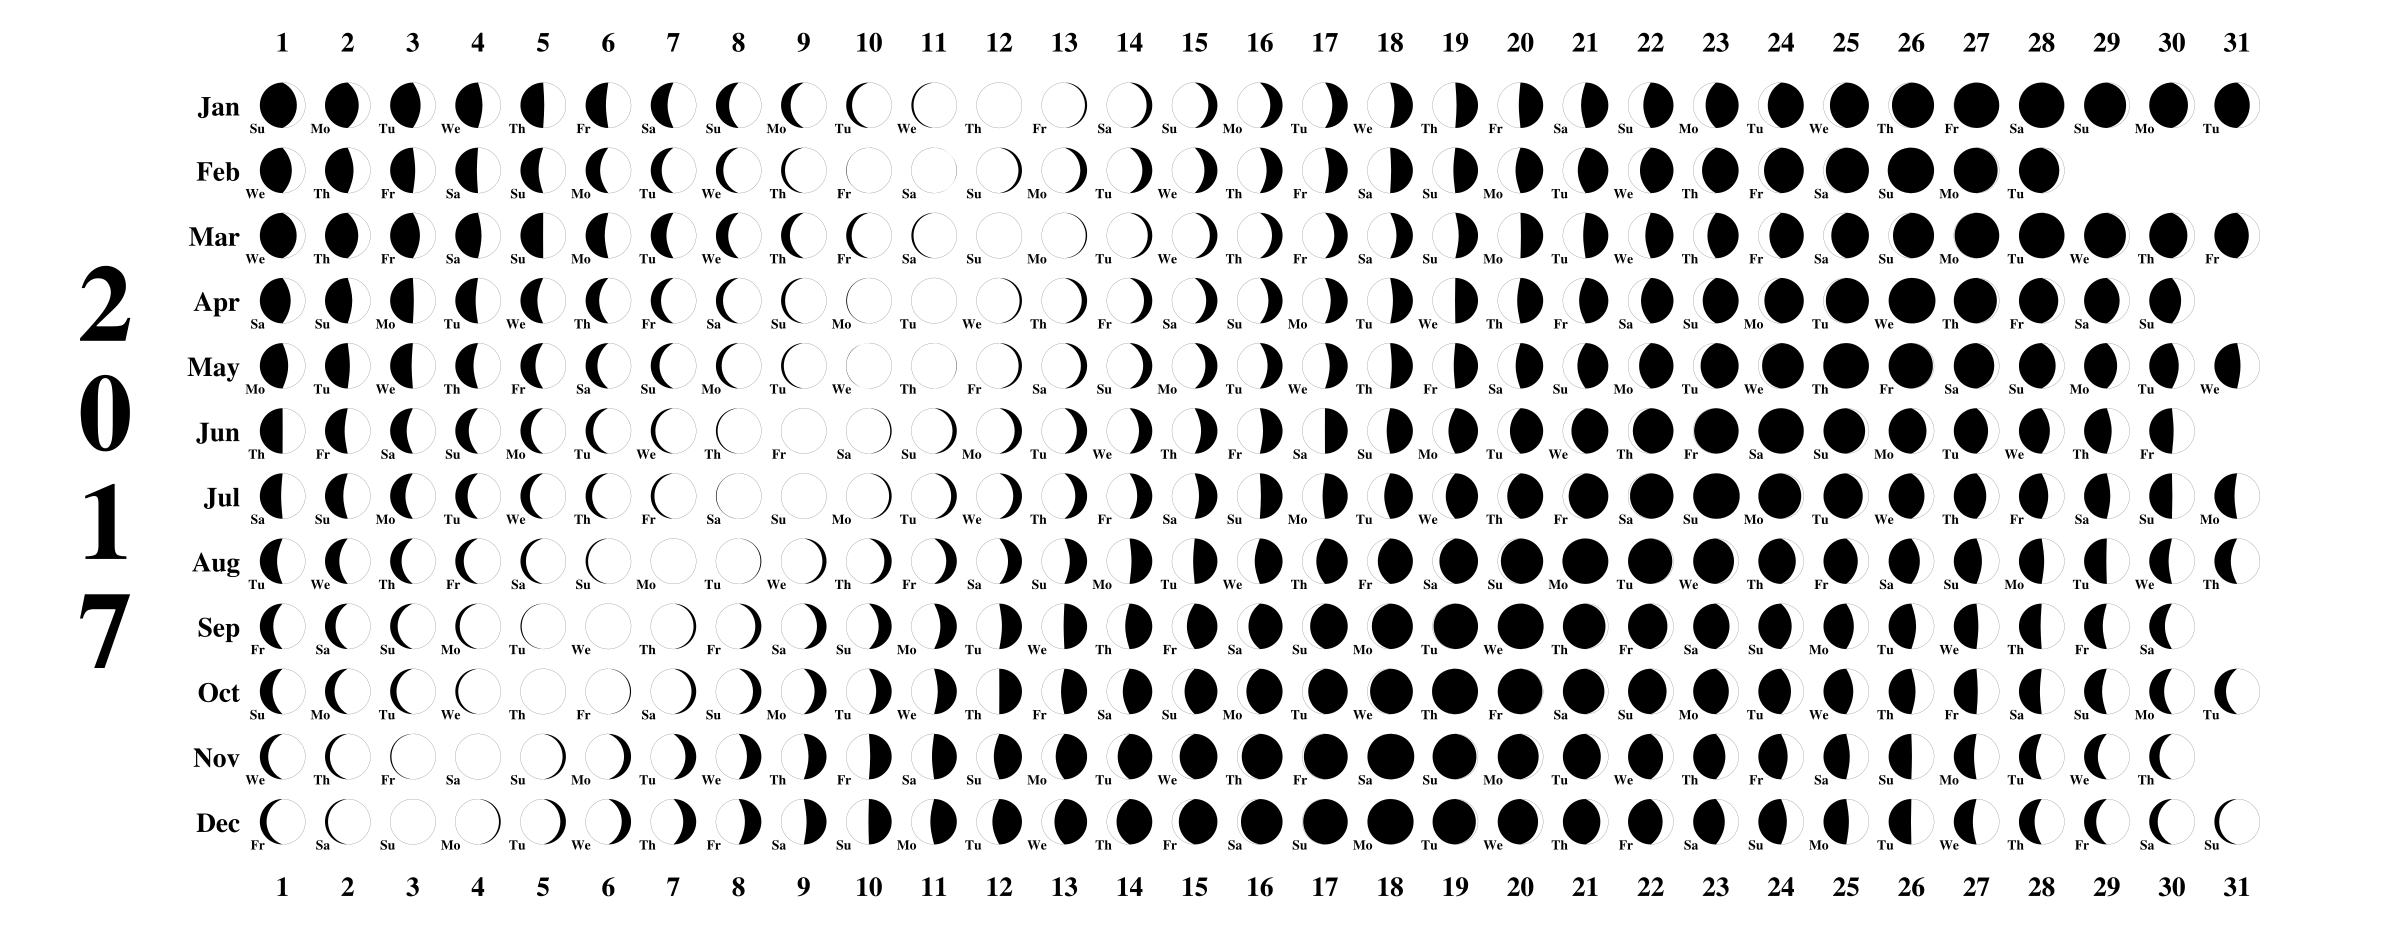 Moon Calendar Keighley Astronomical Society